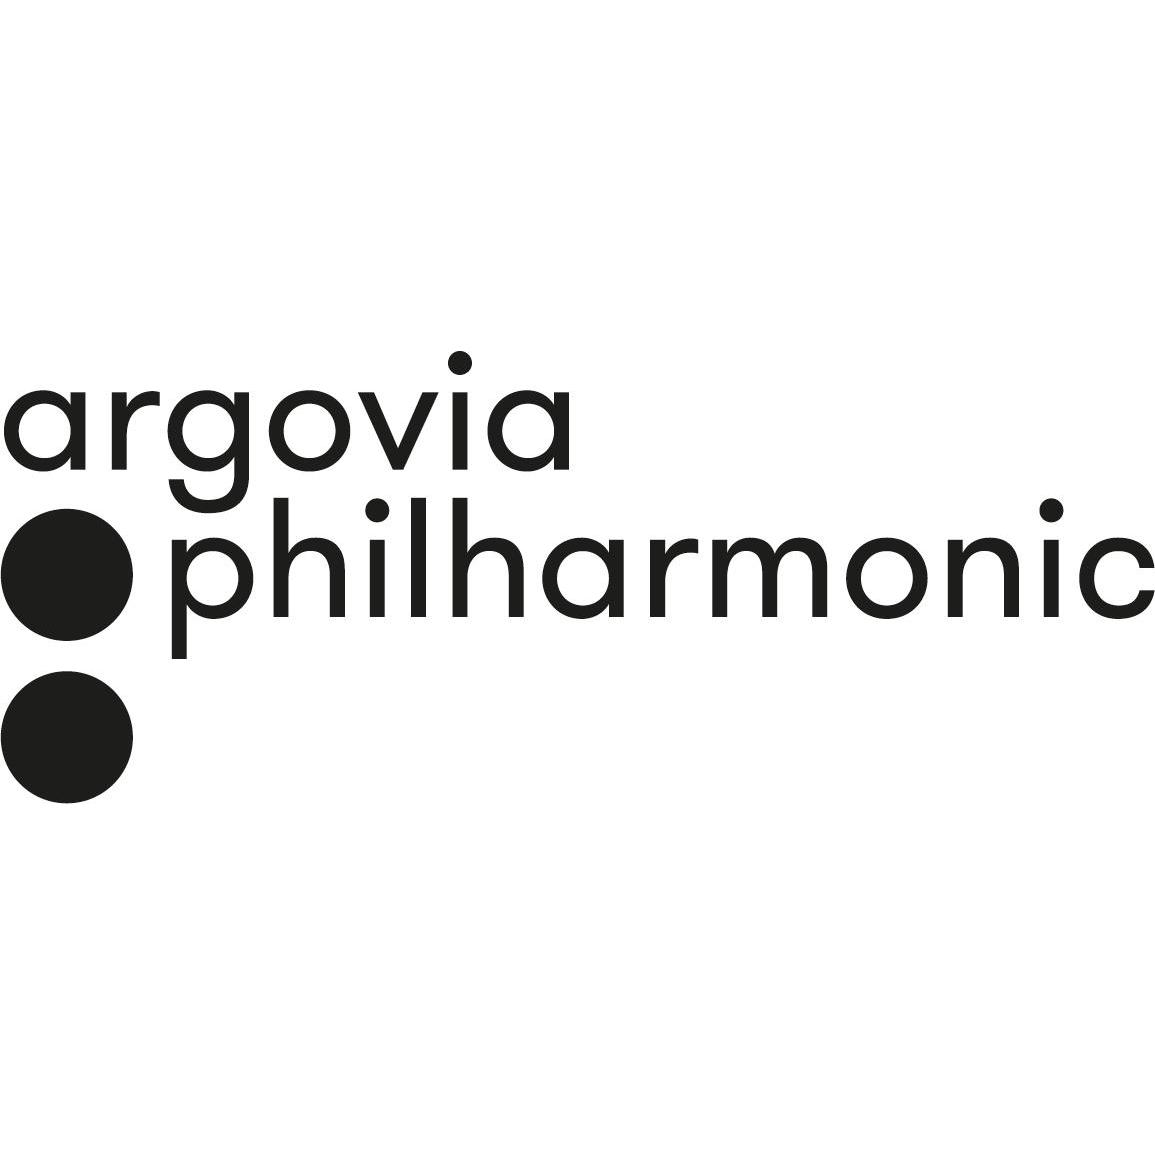 argovia philharmonic Logo